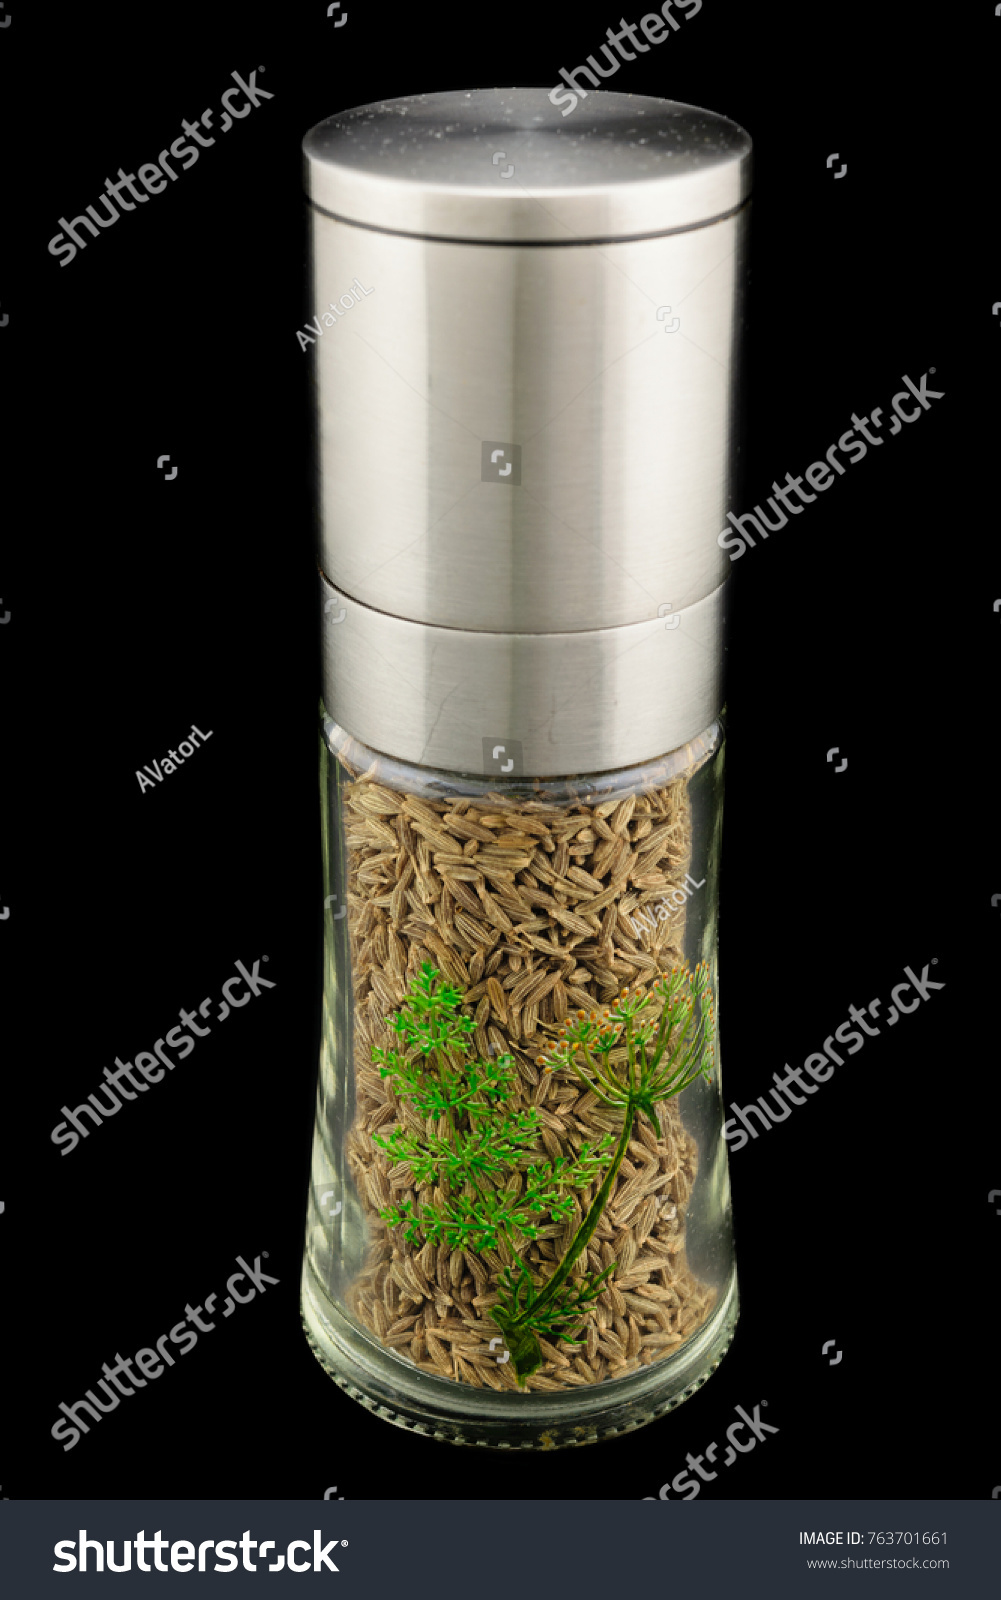 Download Spice Jar With Cumin / Vova Jars Transparent Spice Storage Bottle Pp Salt Seasoning Box Pepper ...